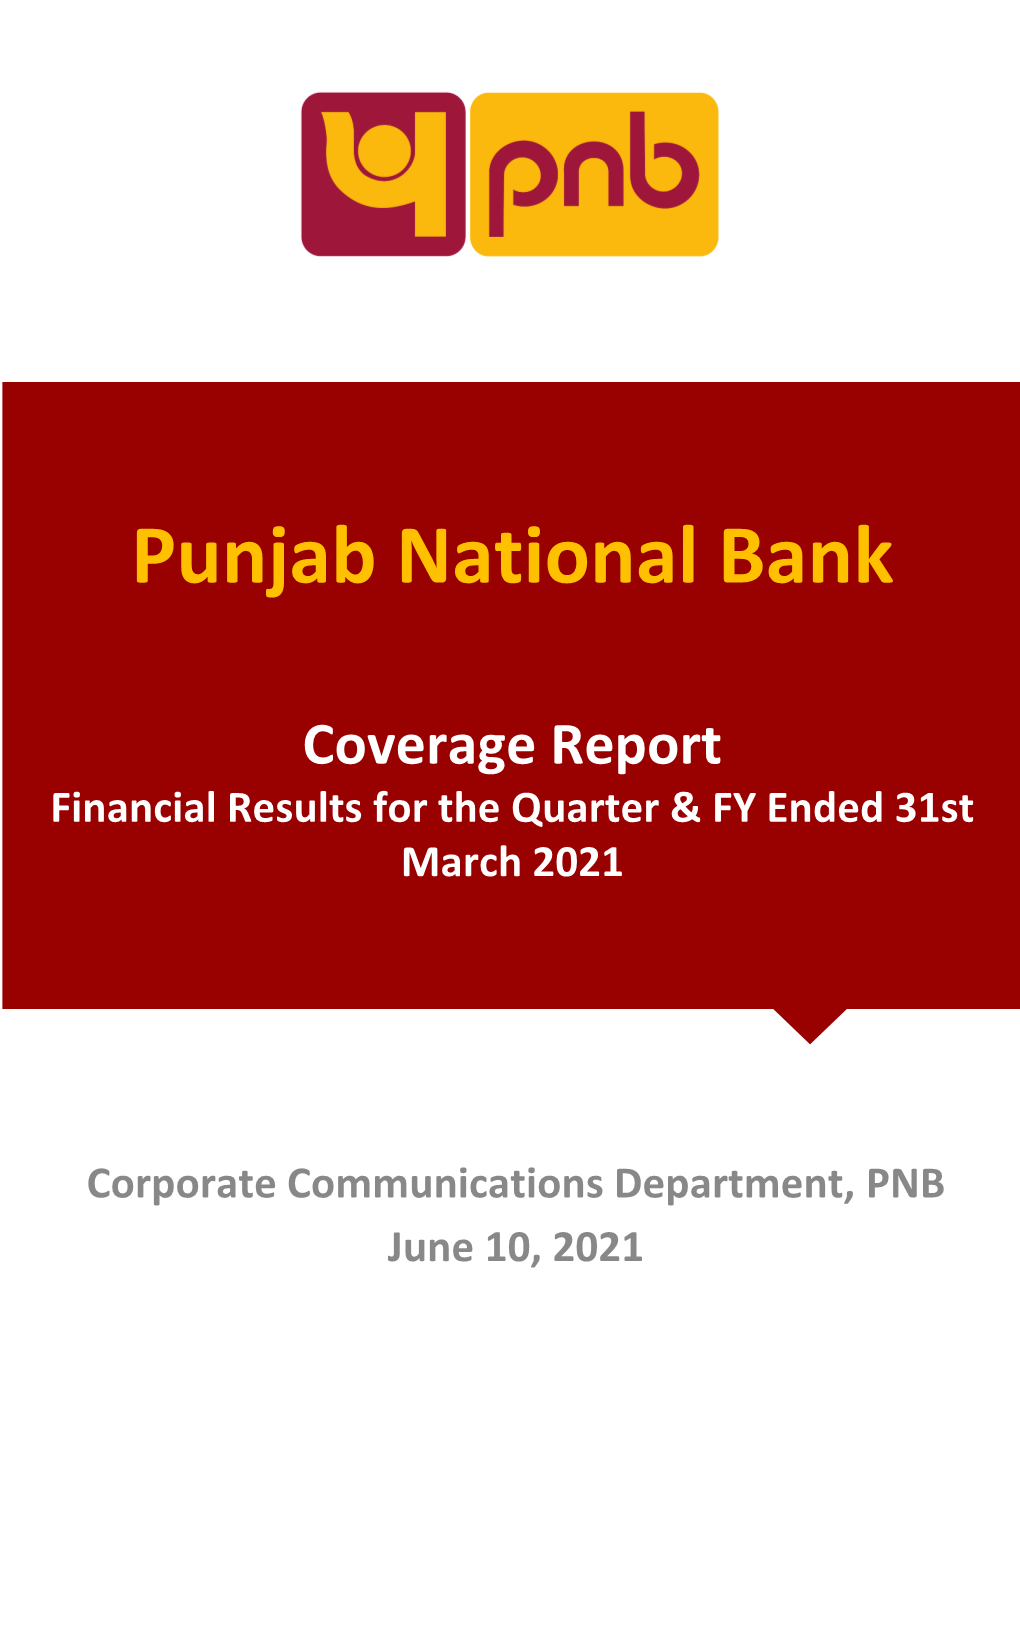 PNB Coverage Report